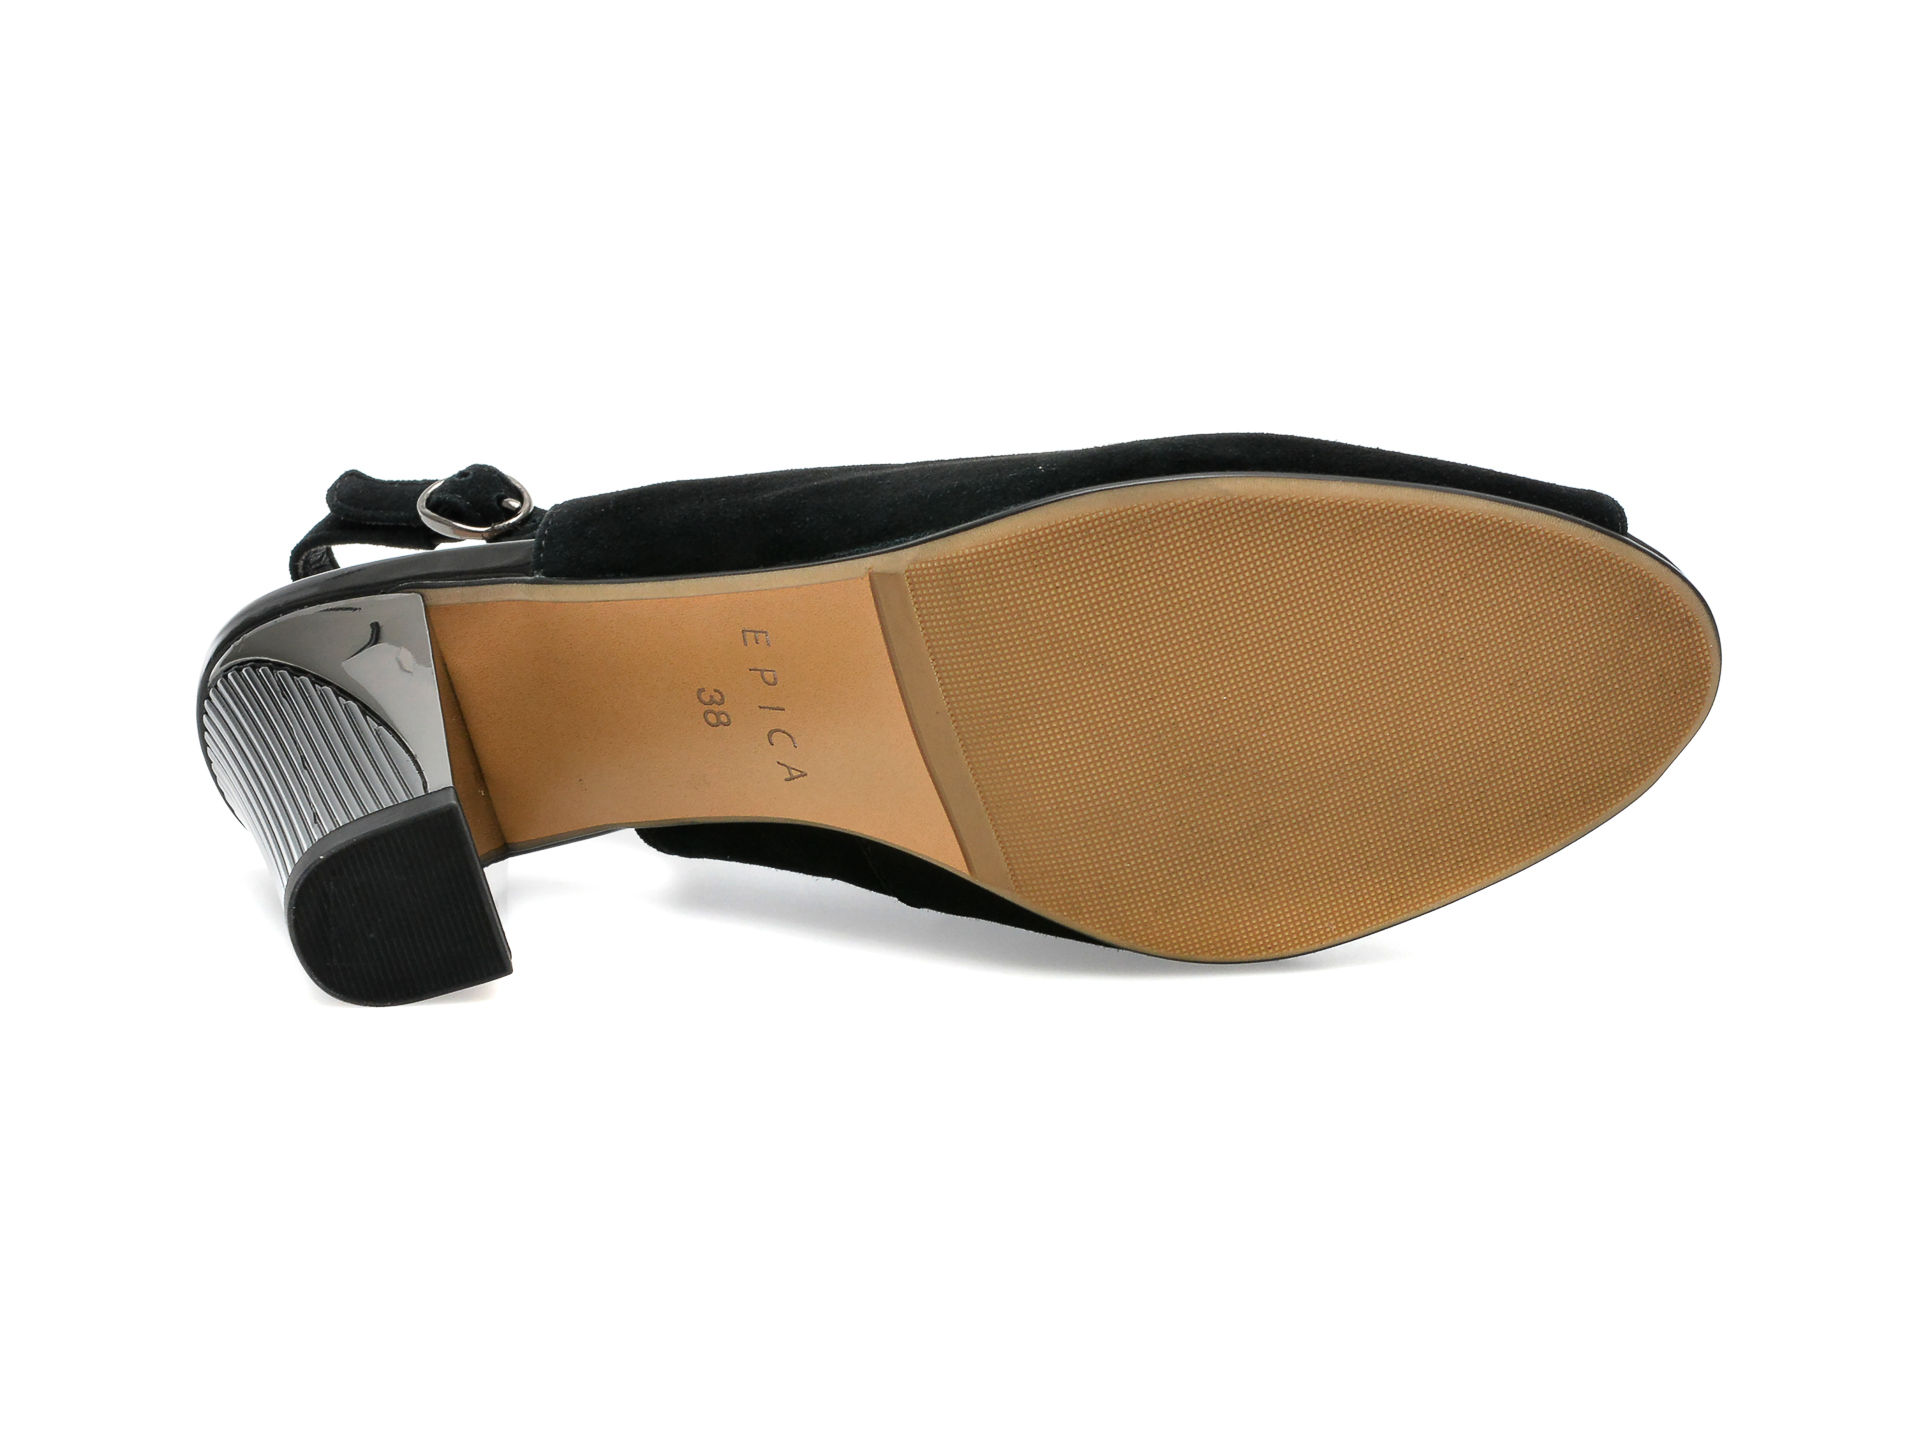 Sandale EPICA negre, MX854, din piele intoarsa